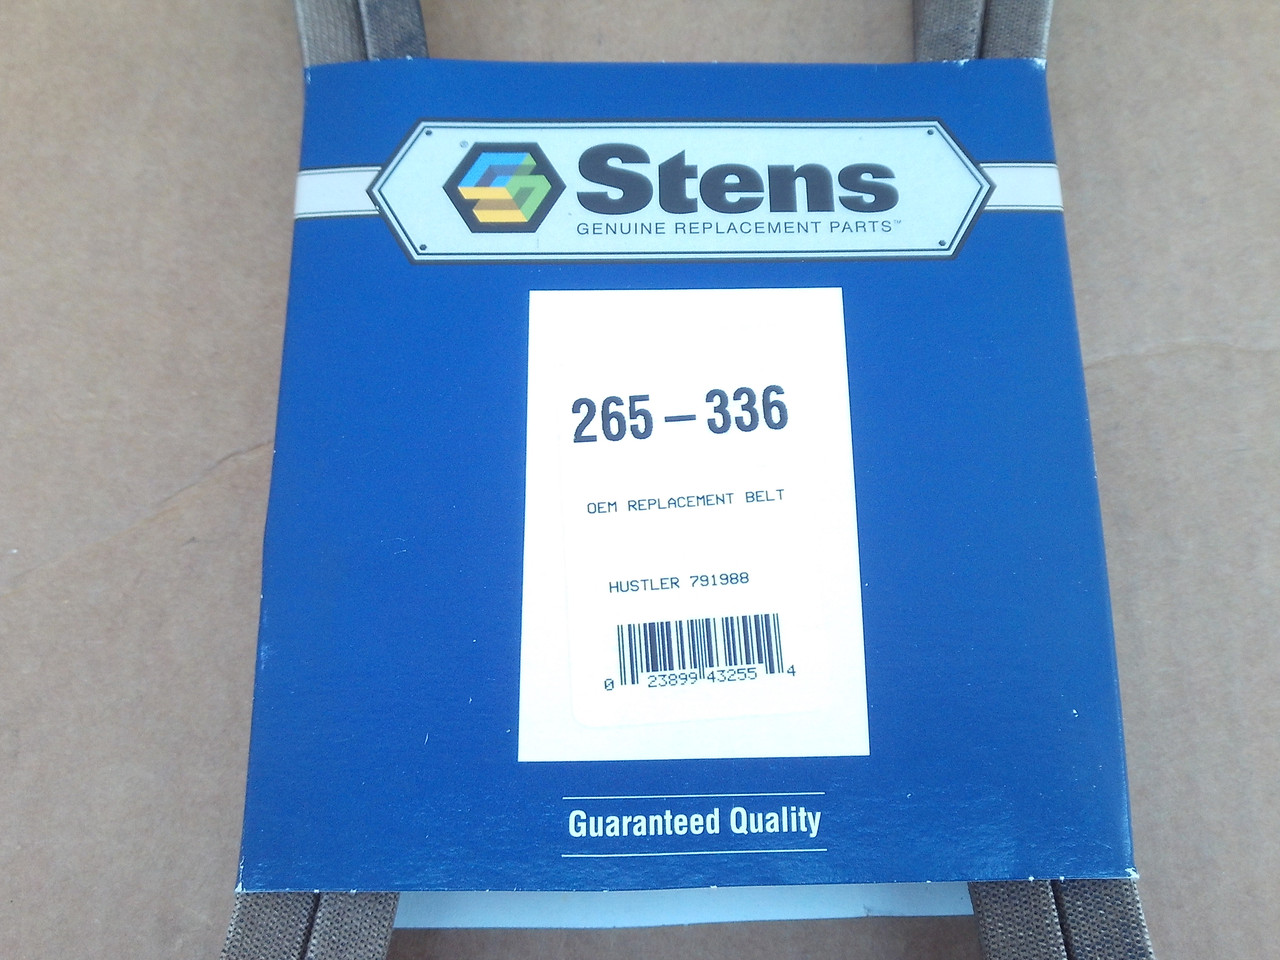 New Stens OEM Replacement Belt 265-336 for Hustler 791988 